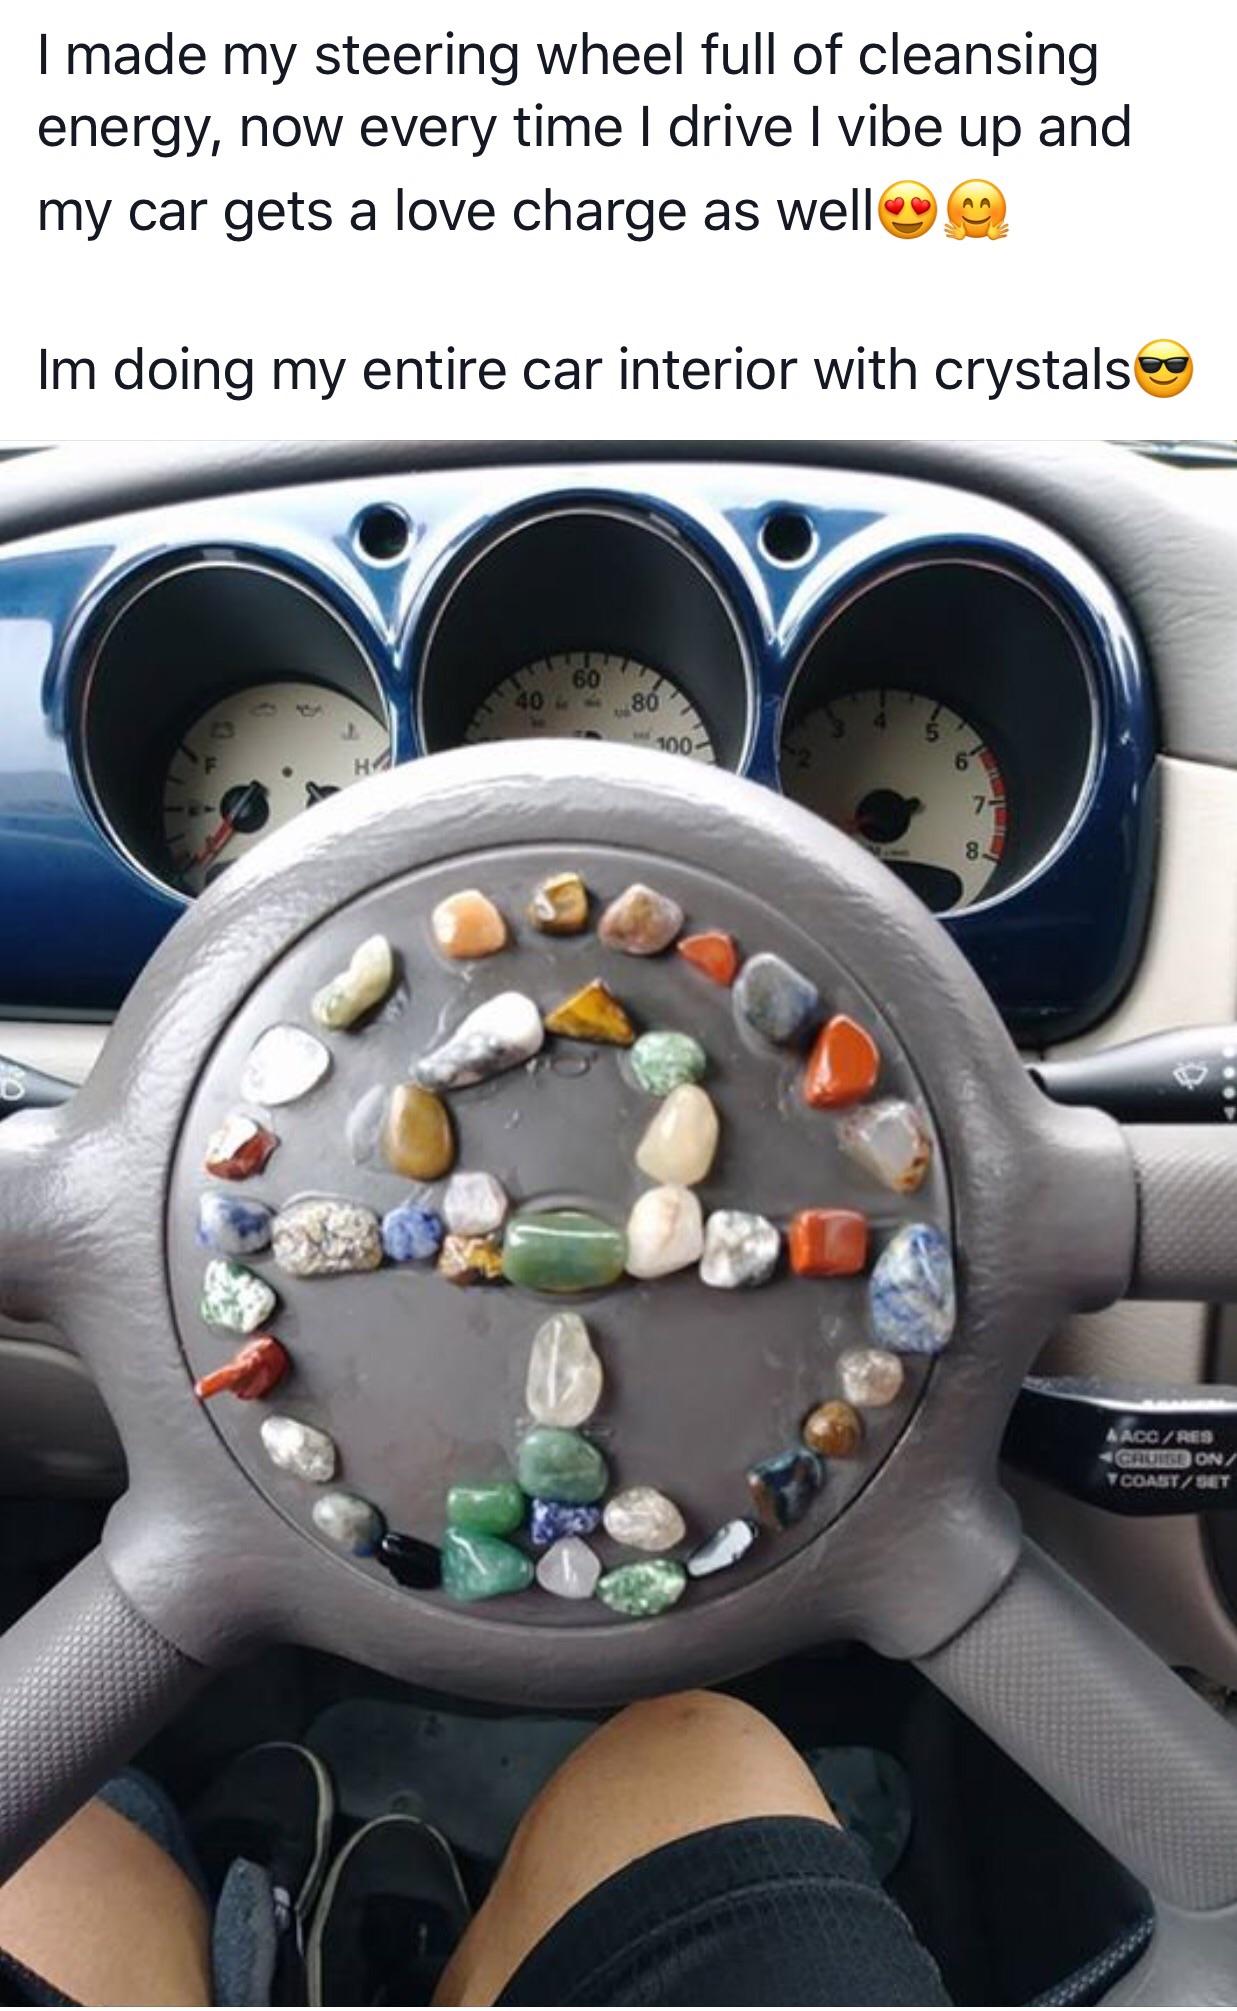 gluing-rocks-on-your-steering-wheel-isn-